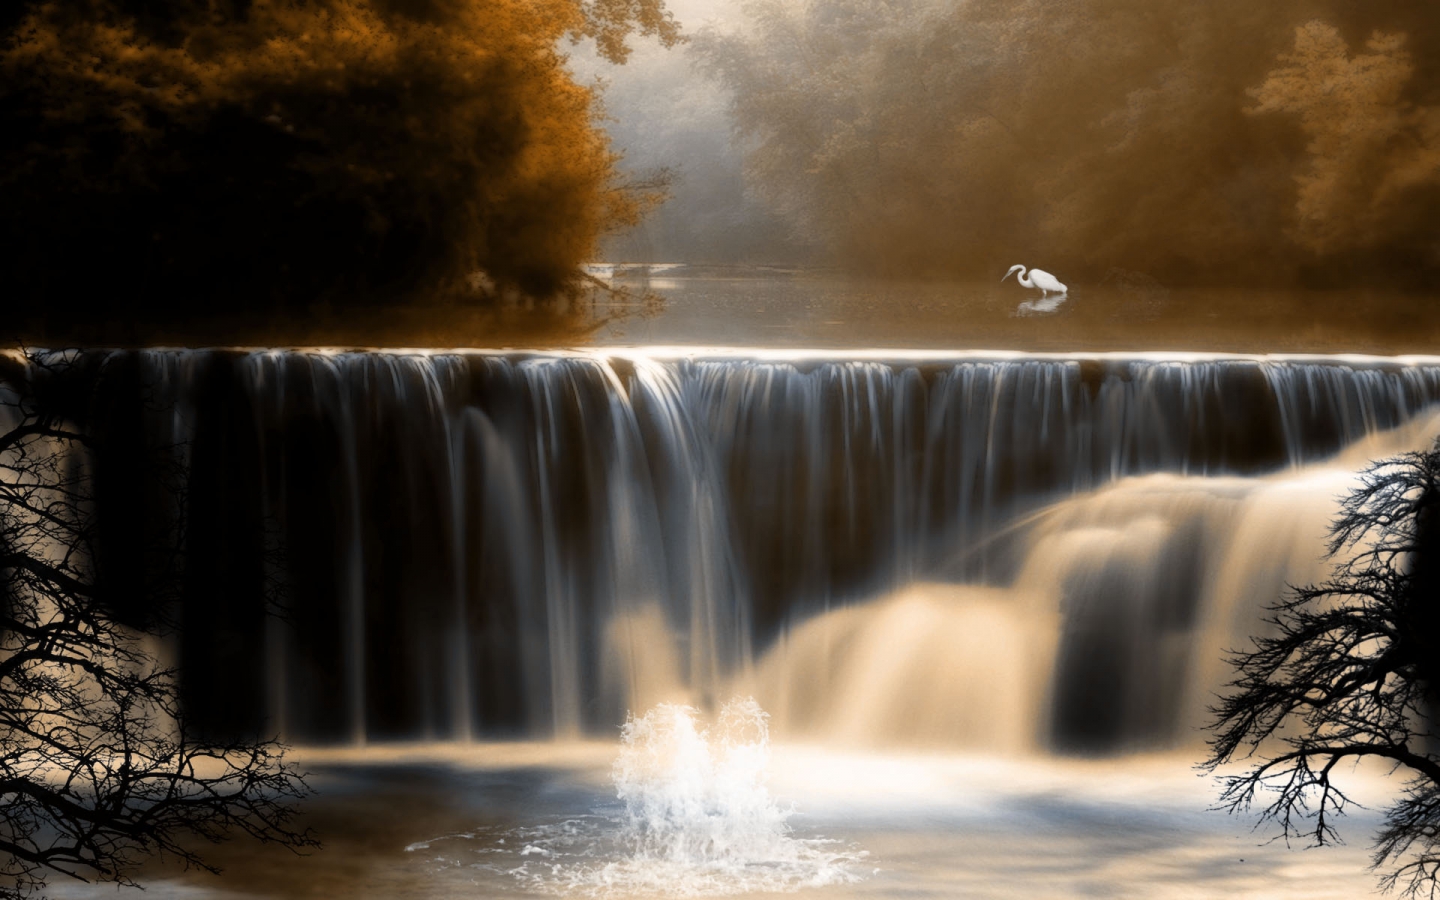 Beautiful Autumn landscape for 1440 x 900 widescreen resolution